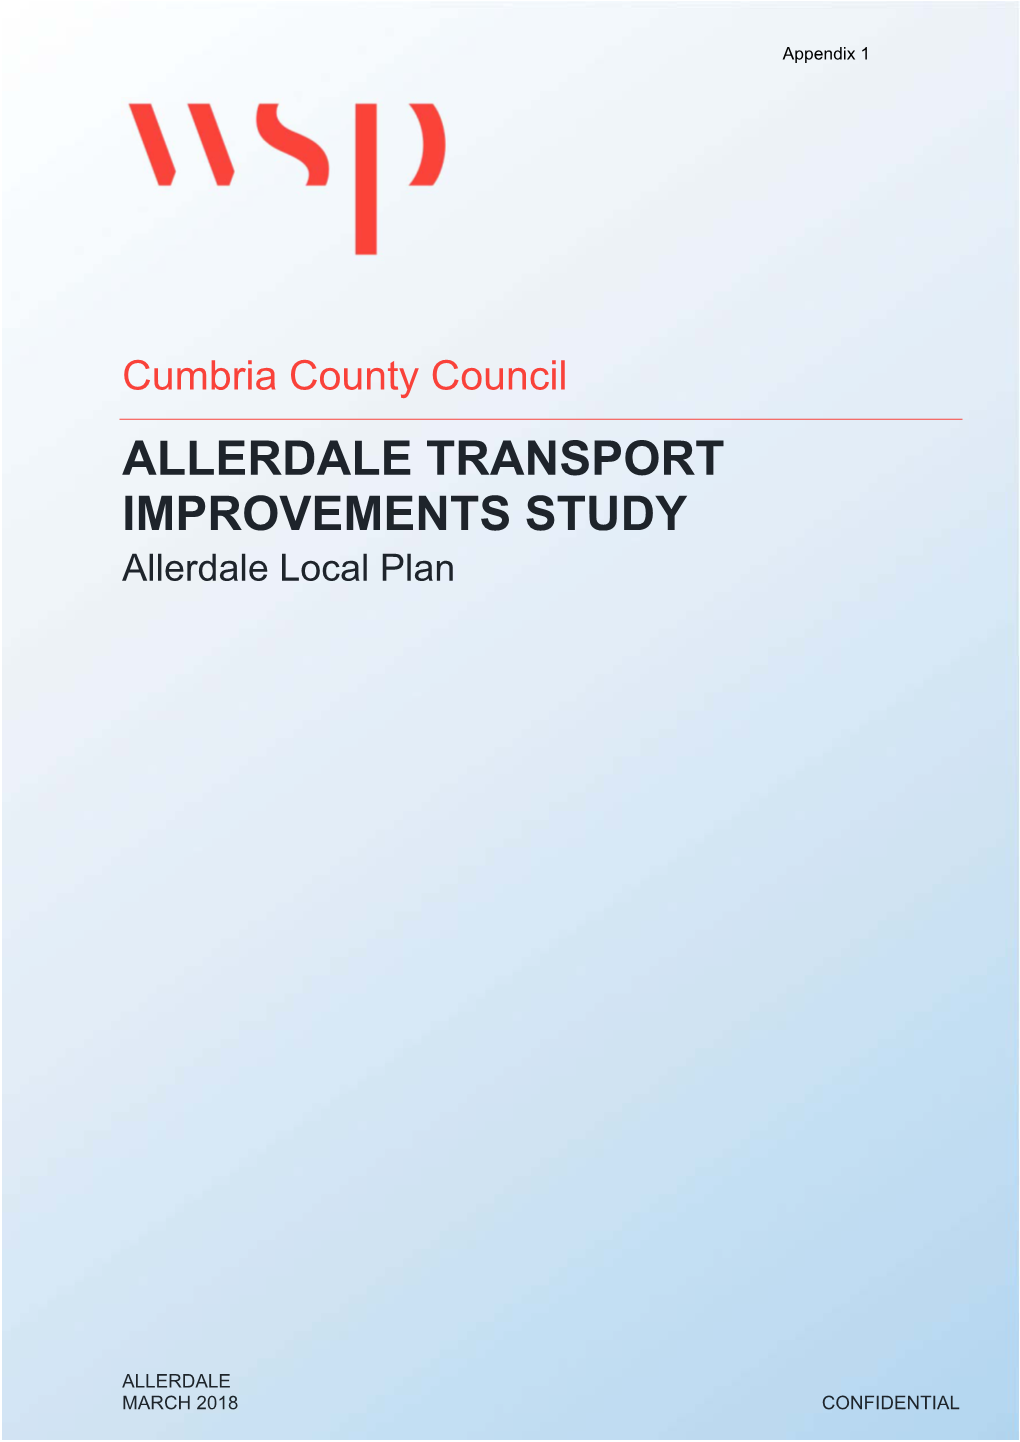 ALLERDALE TRANSPORT IMPROVEMENTS STUDY Allerdale Local Plan